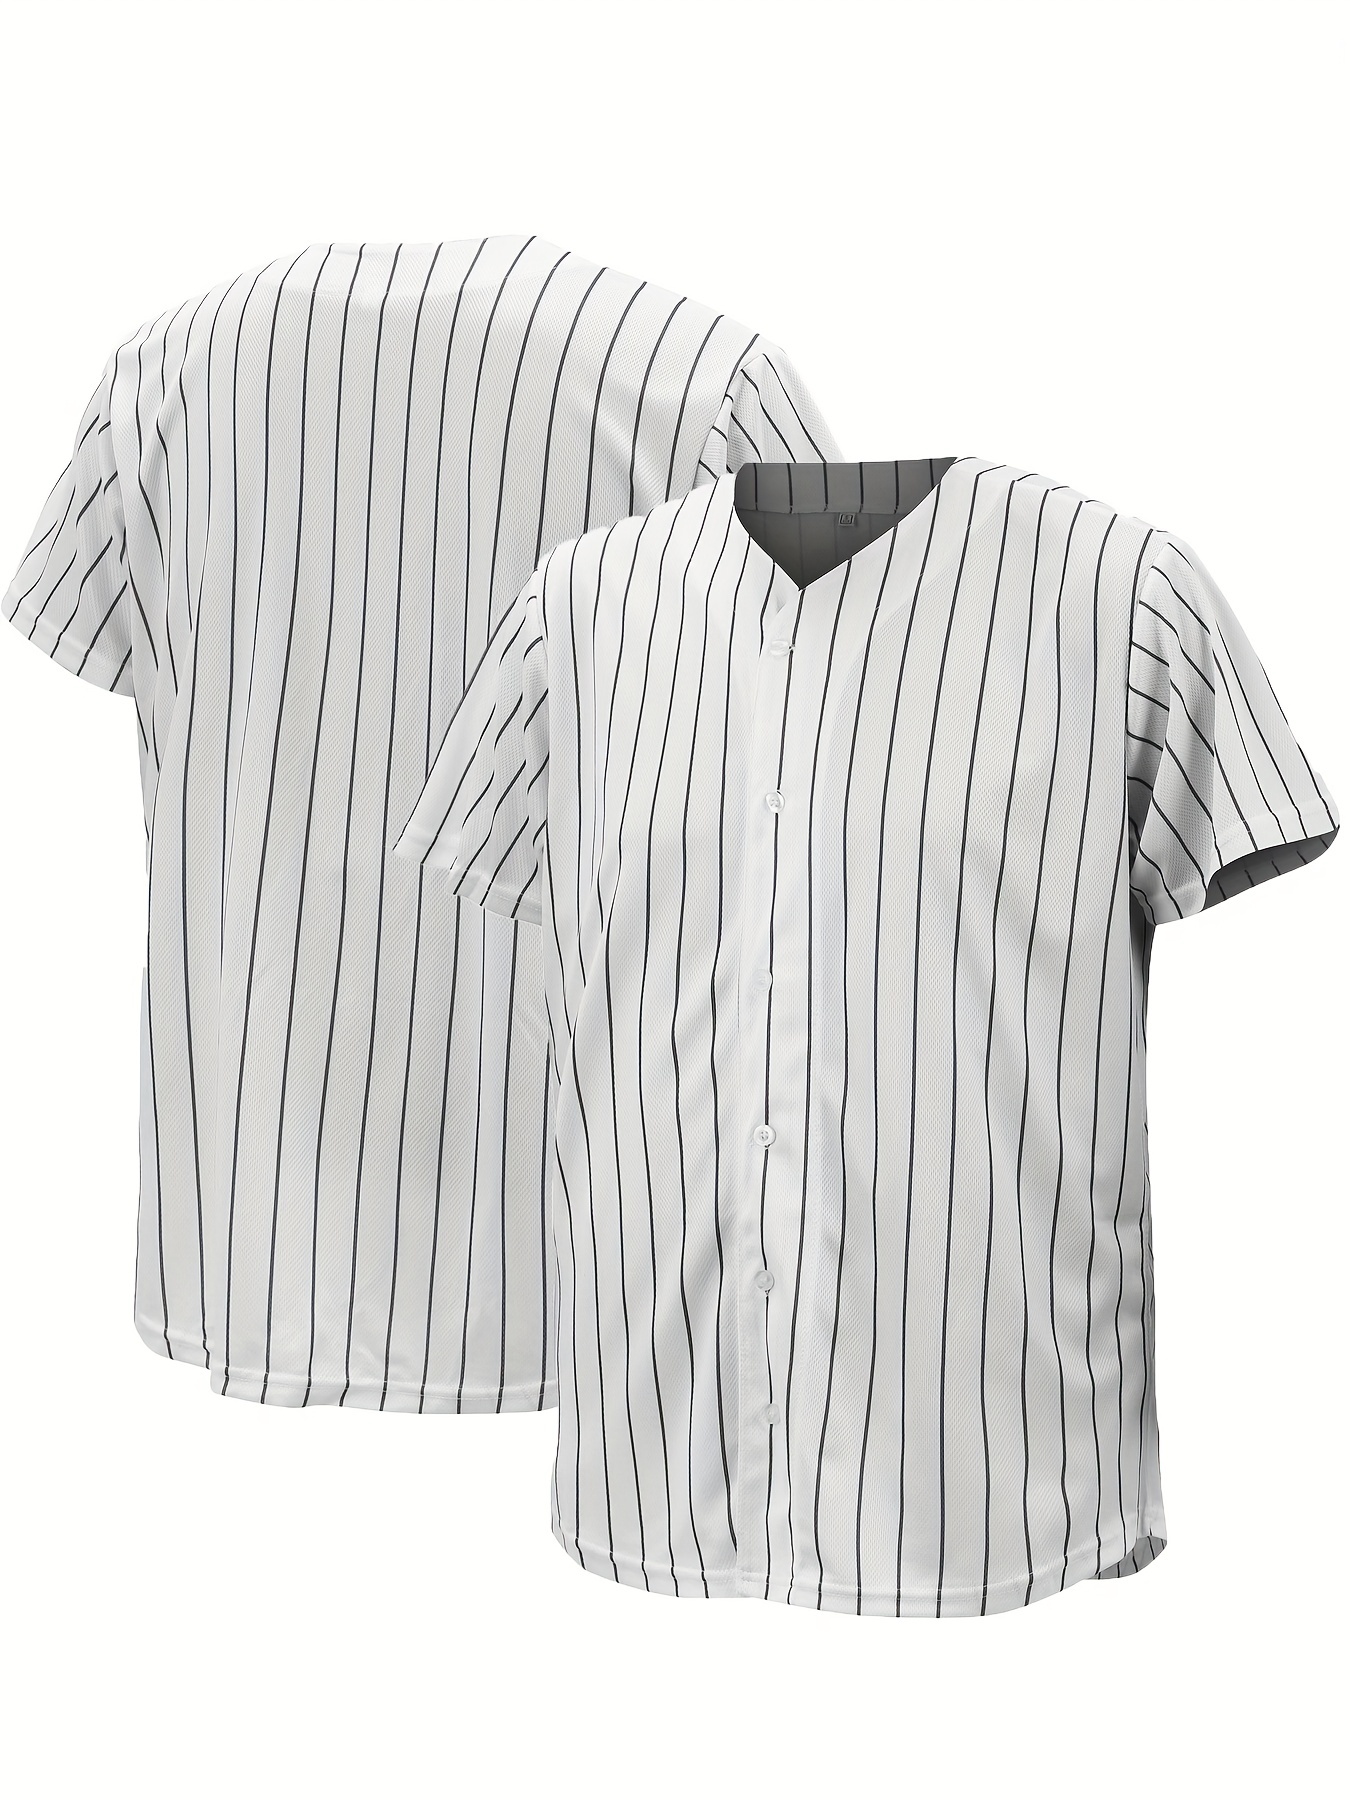 Men's Blank Baseball Jerseys Plain Casual Short-sleeved Button T-Shirts, T Shirt, Tees, Simple Fashion Sports Uniform Tops,Temu